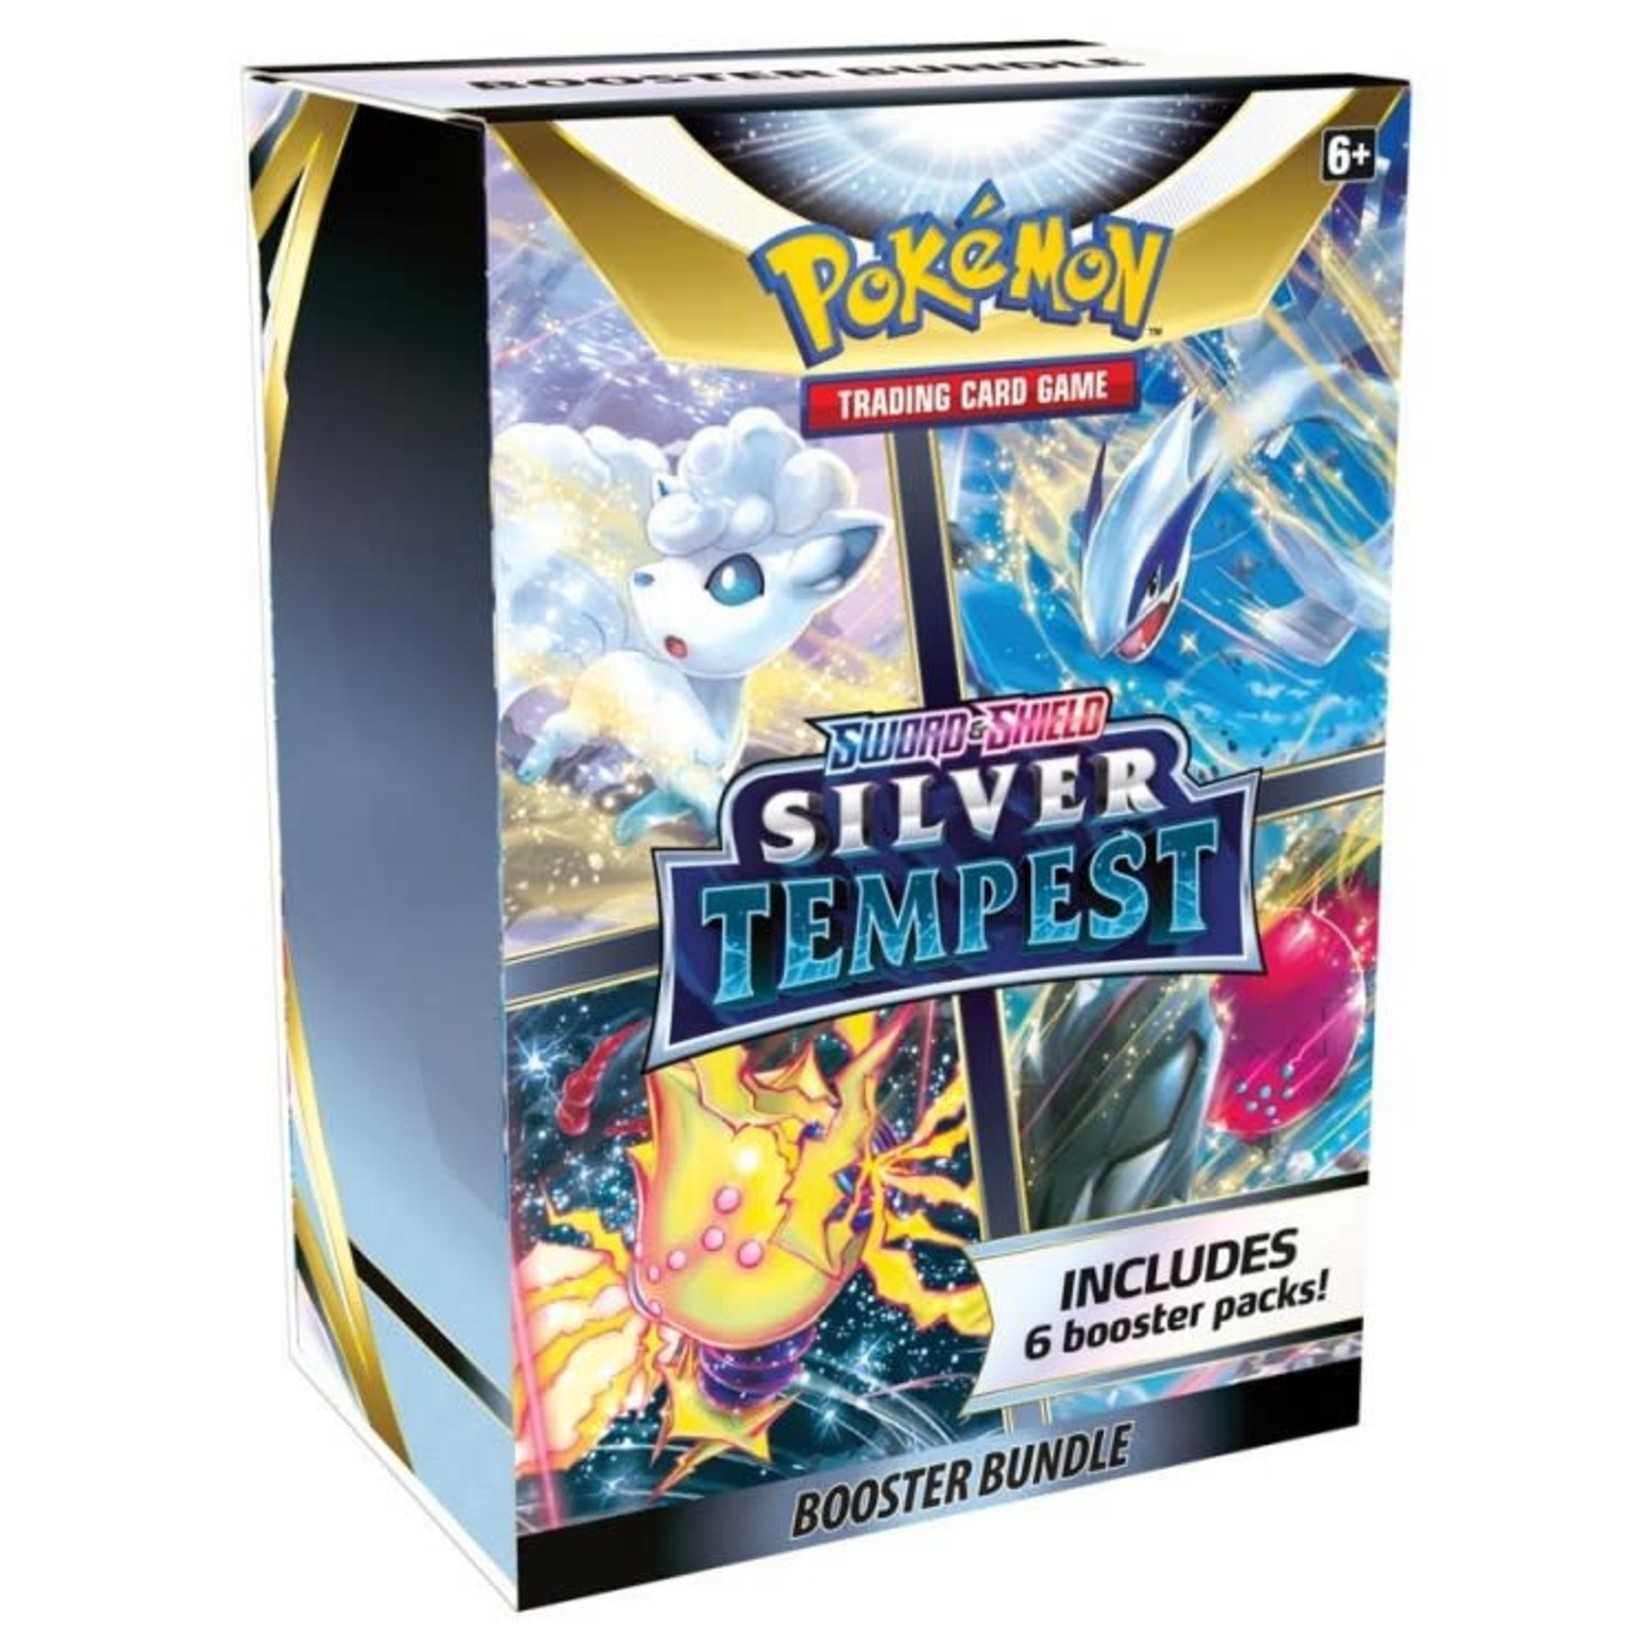 Pokemon International Pokemon Trading Card Game: Silver Tempest Booster Bundle